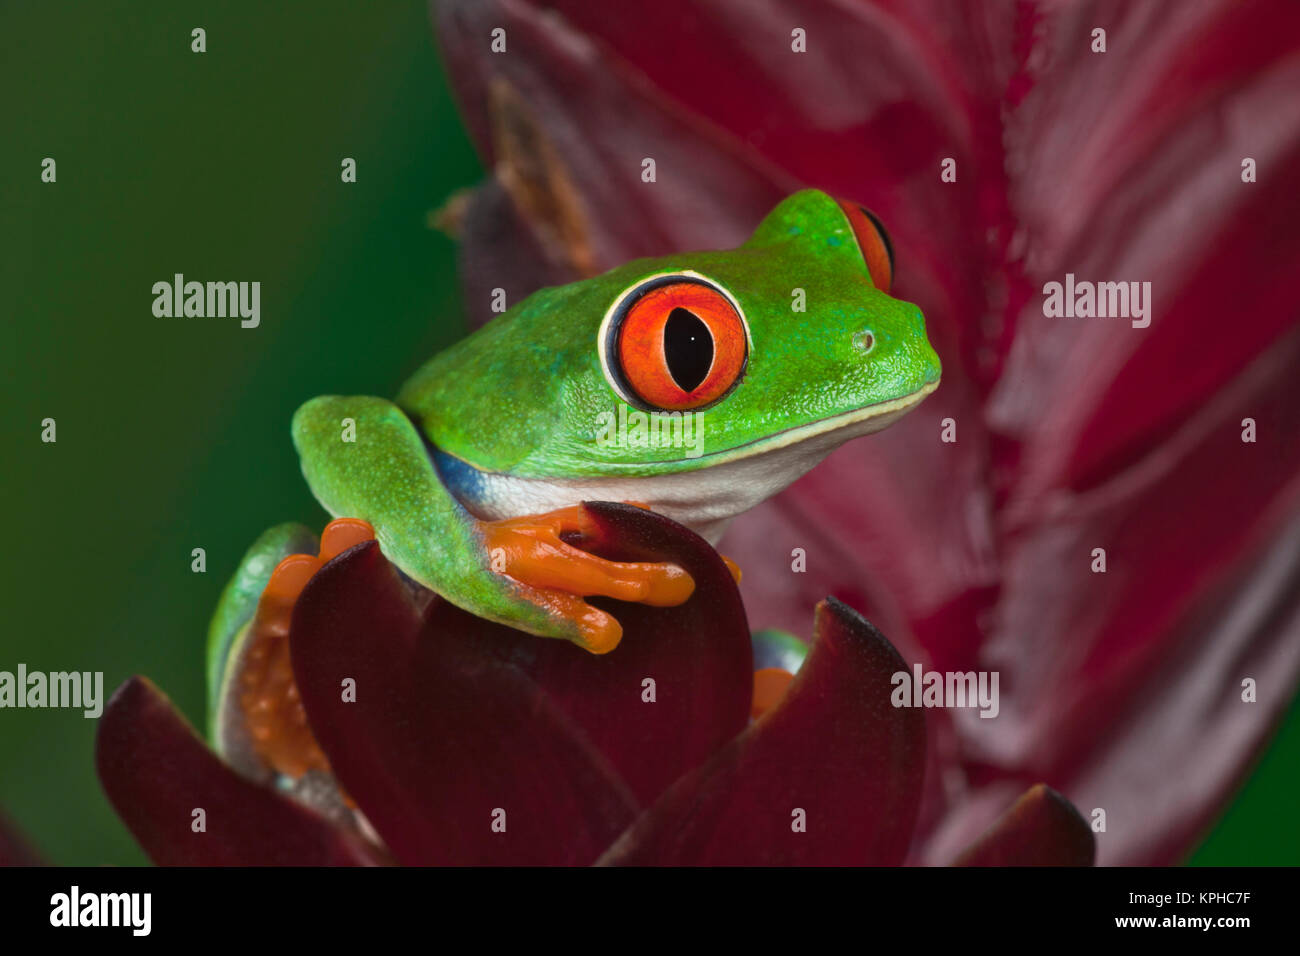 Red-eyed treefrog Foto Stock